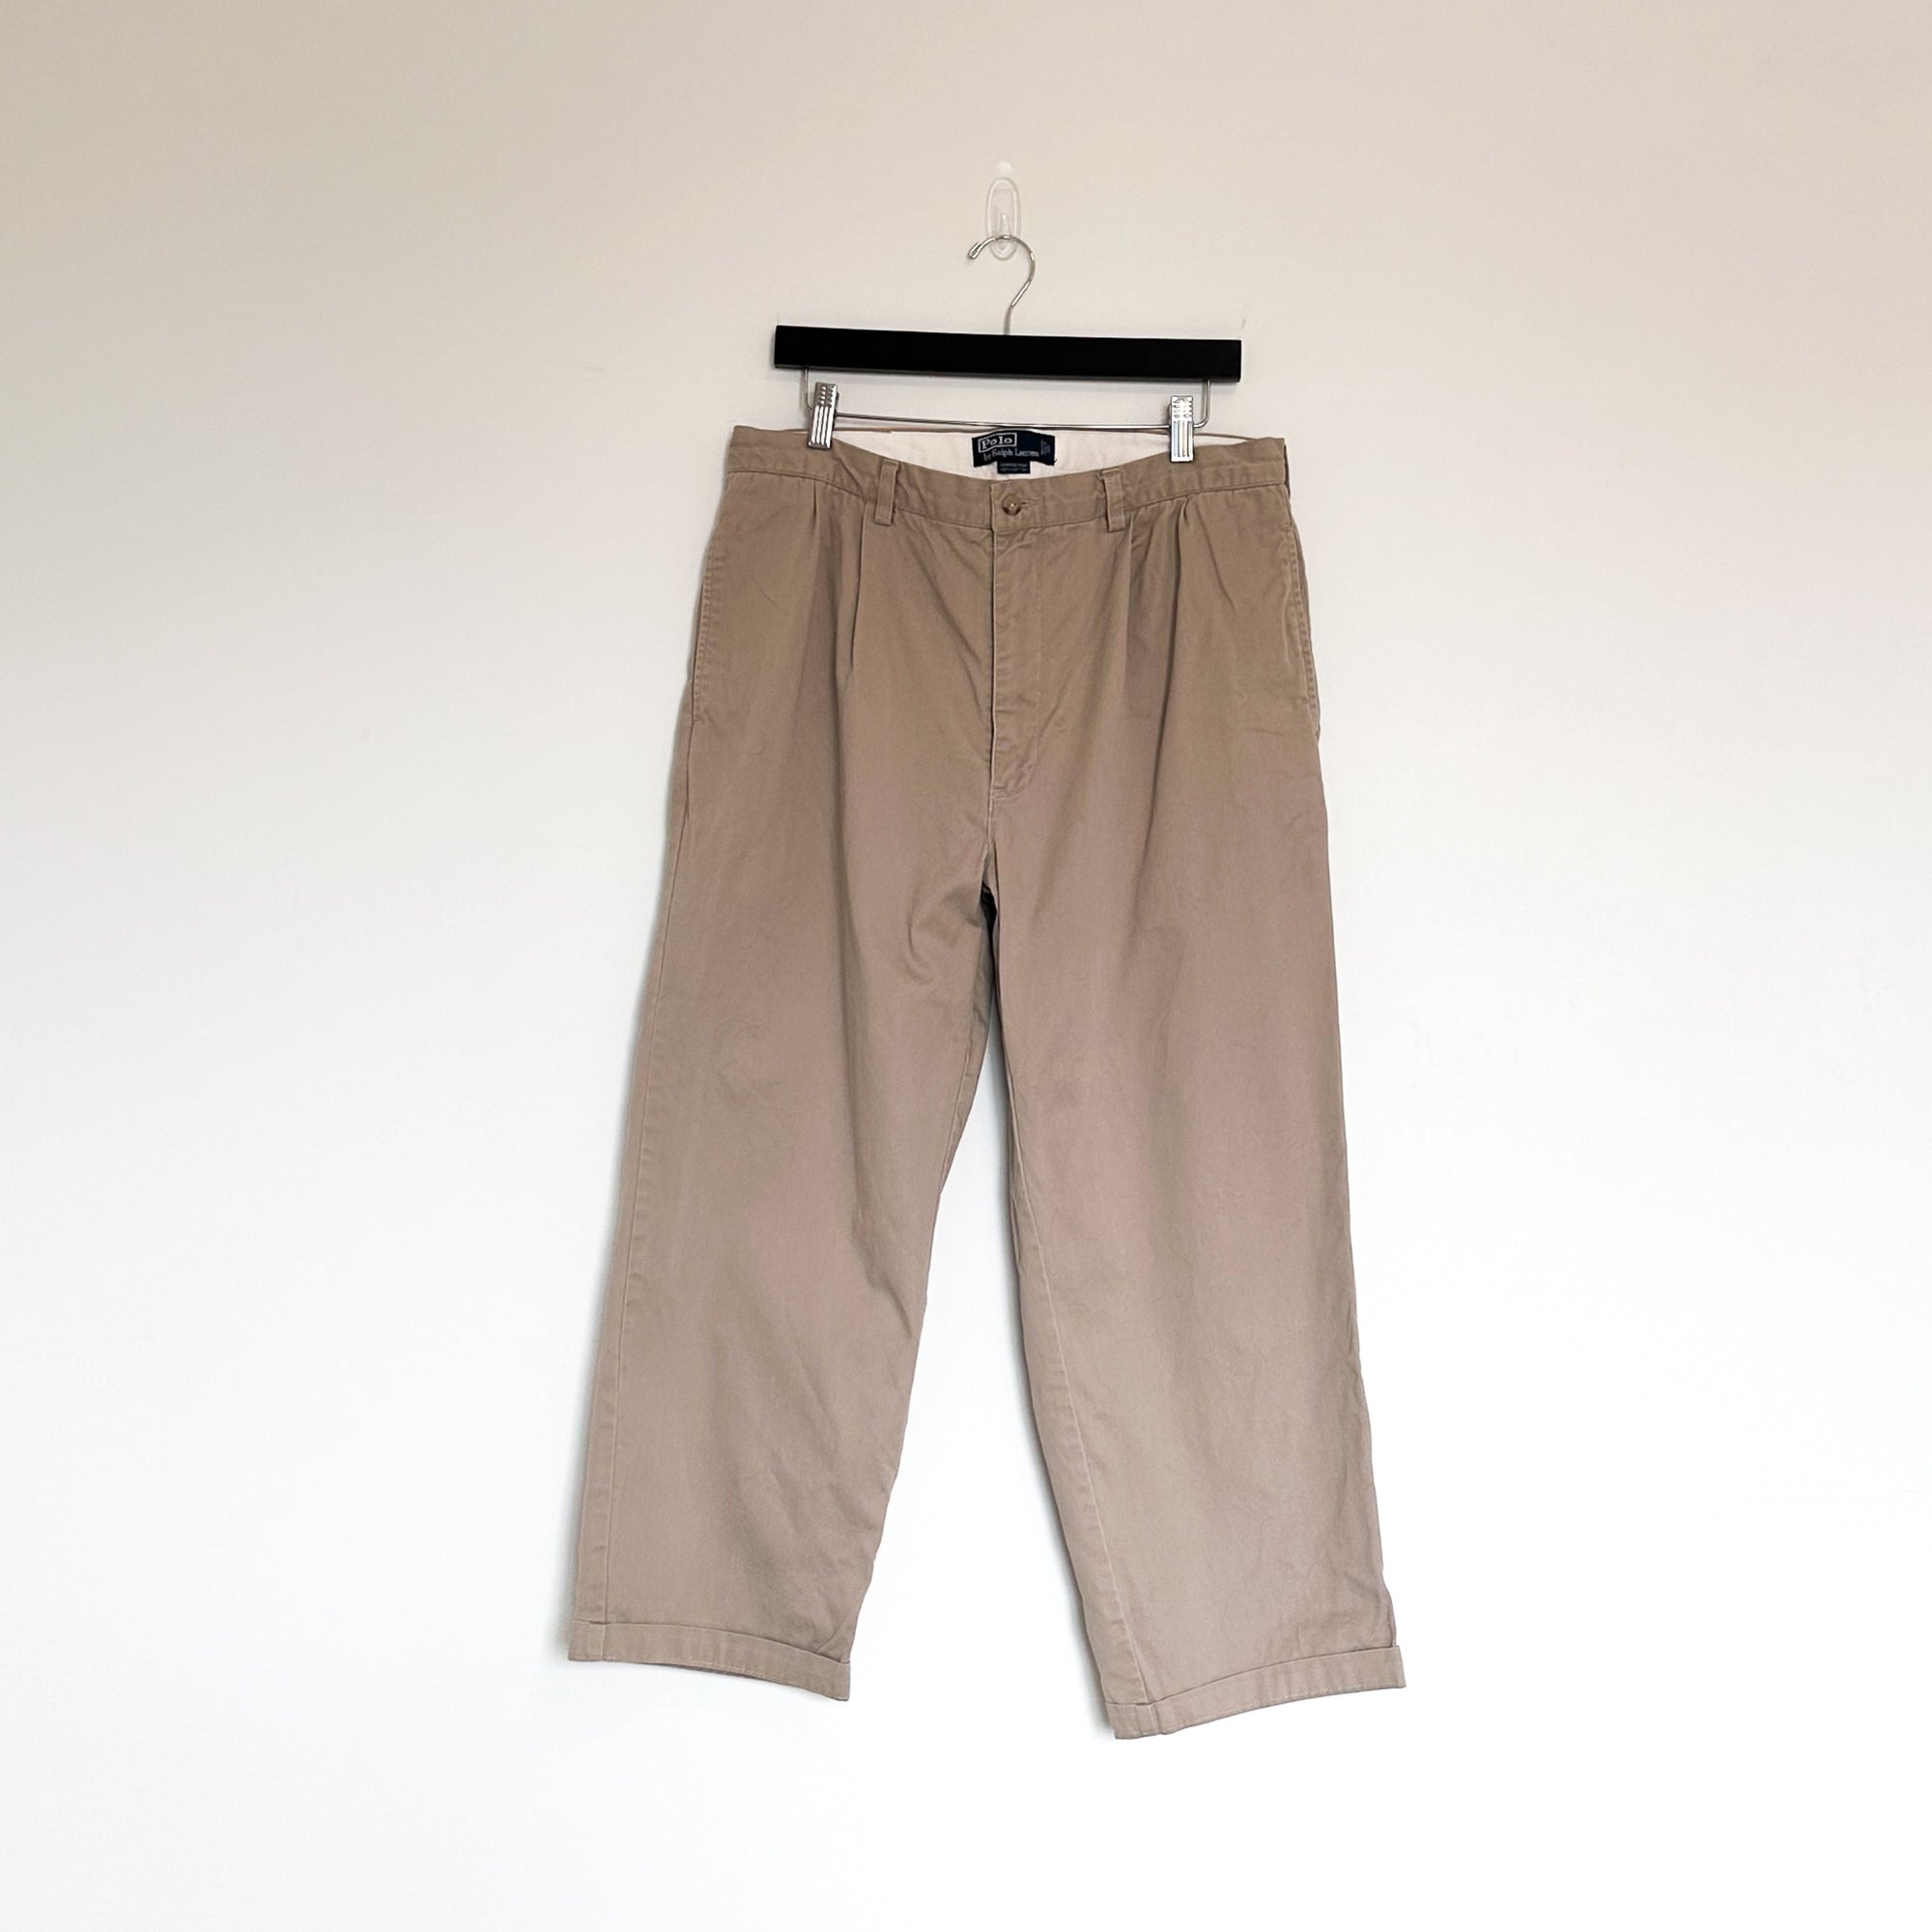 PL Ralph Lauren Cuffed Trouser in Dark Taupe 35x30